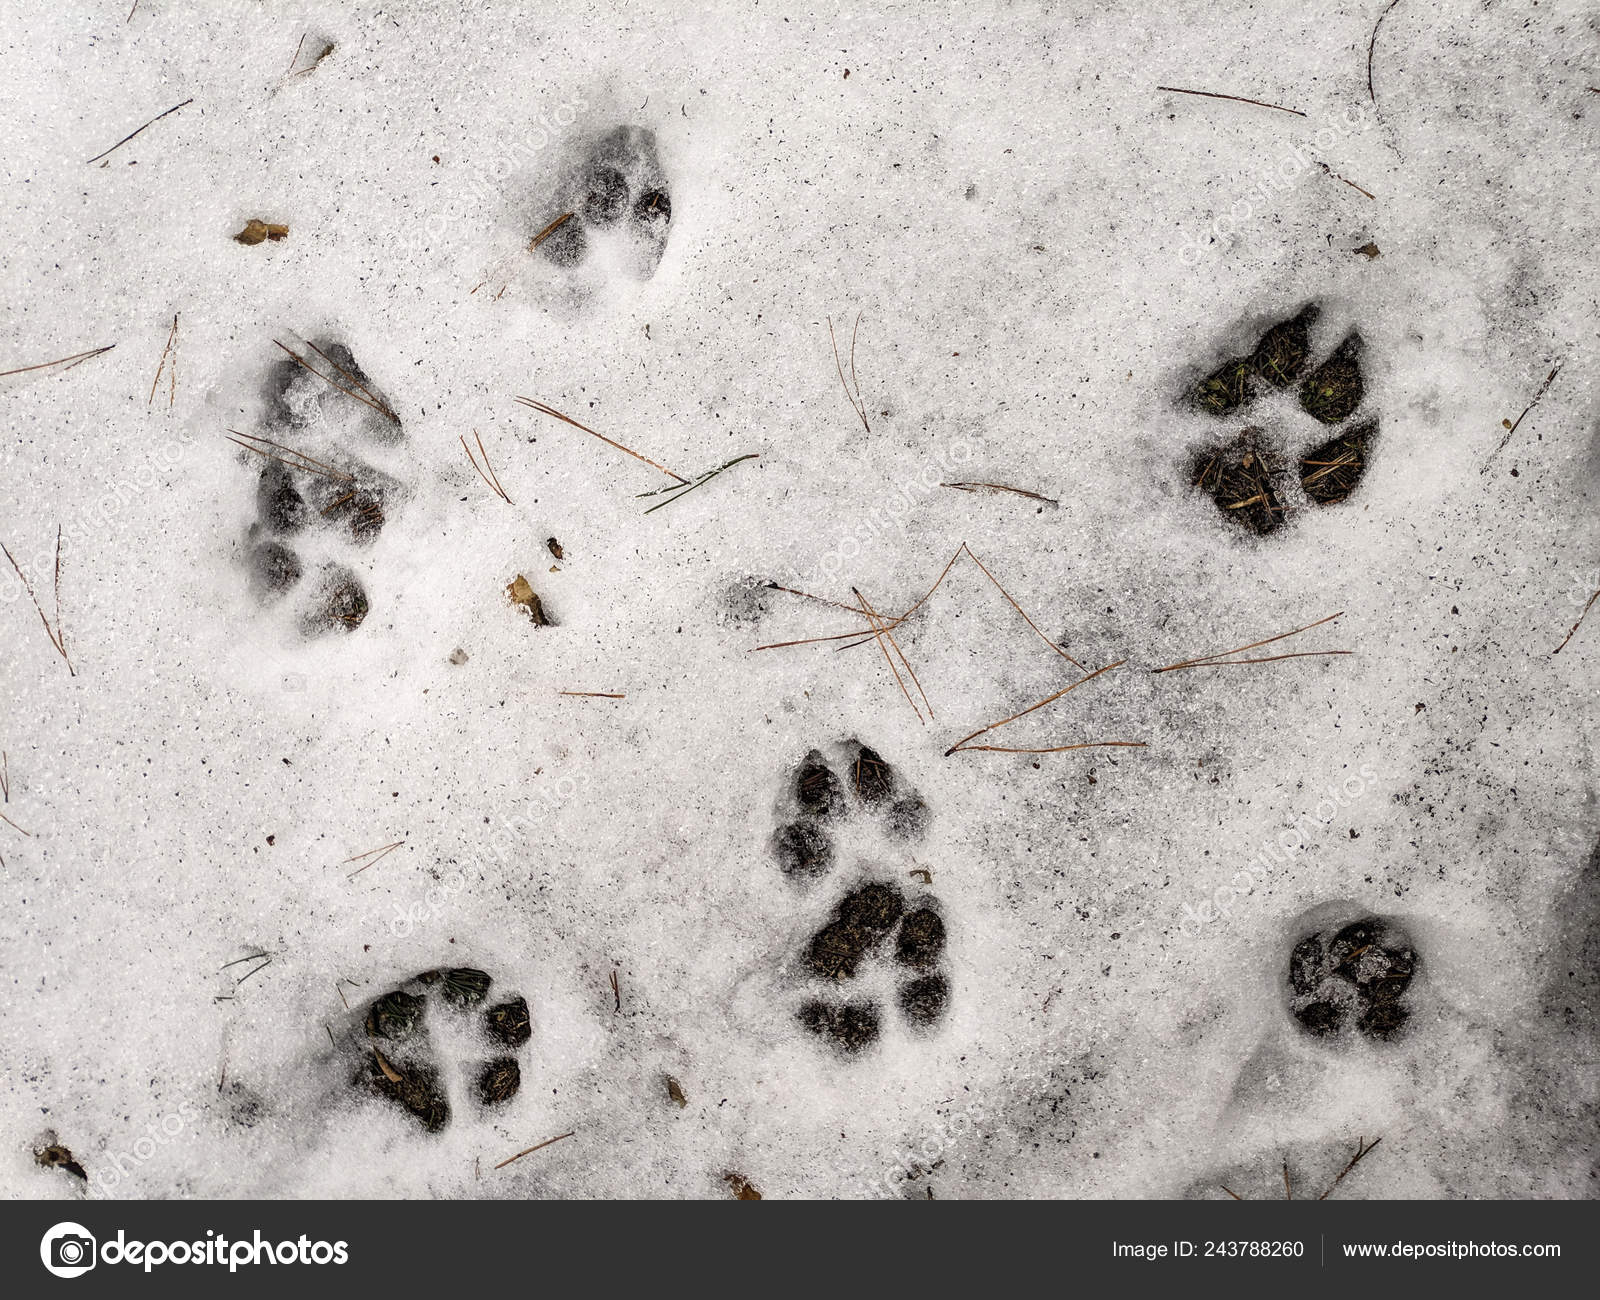 Волчий след на снегу и собачий